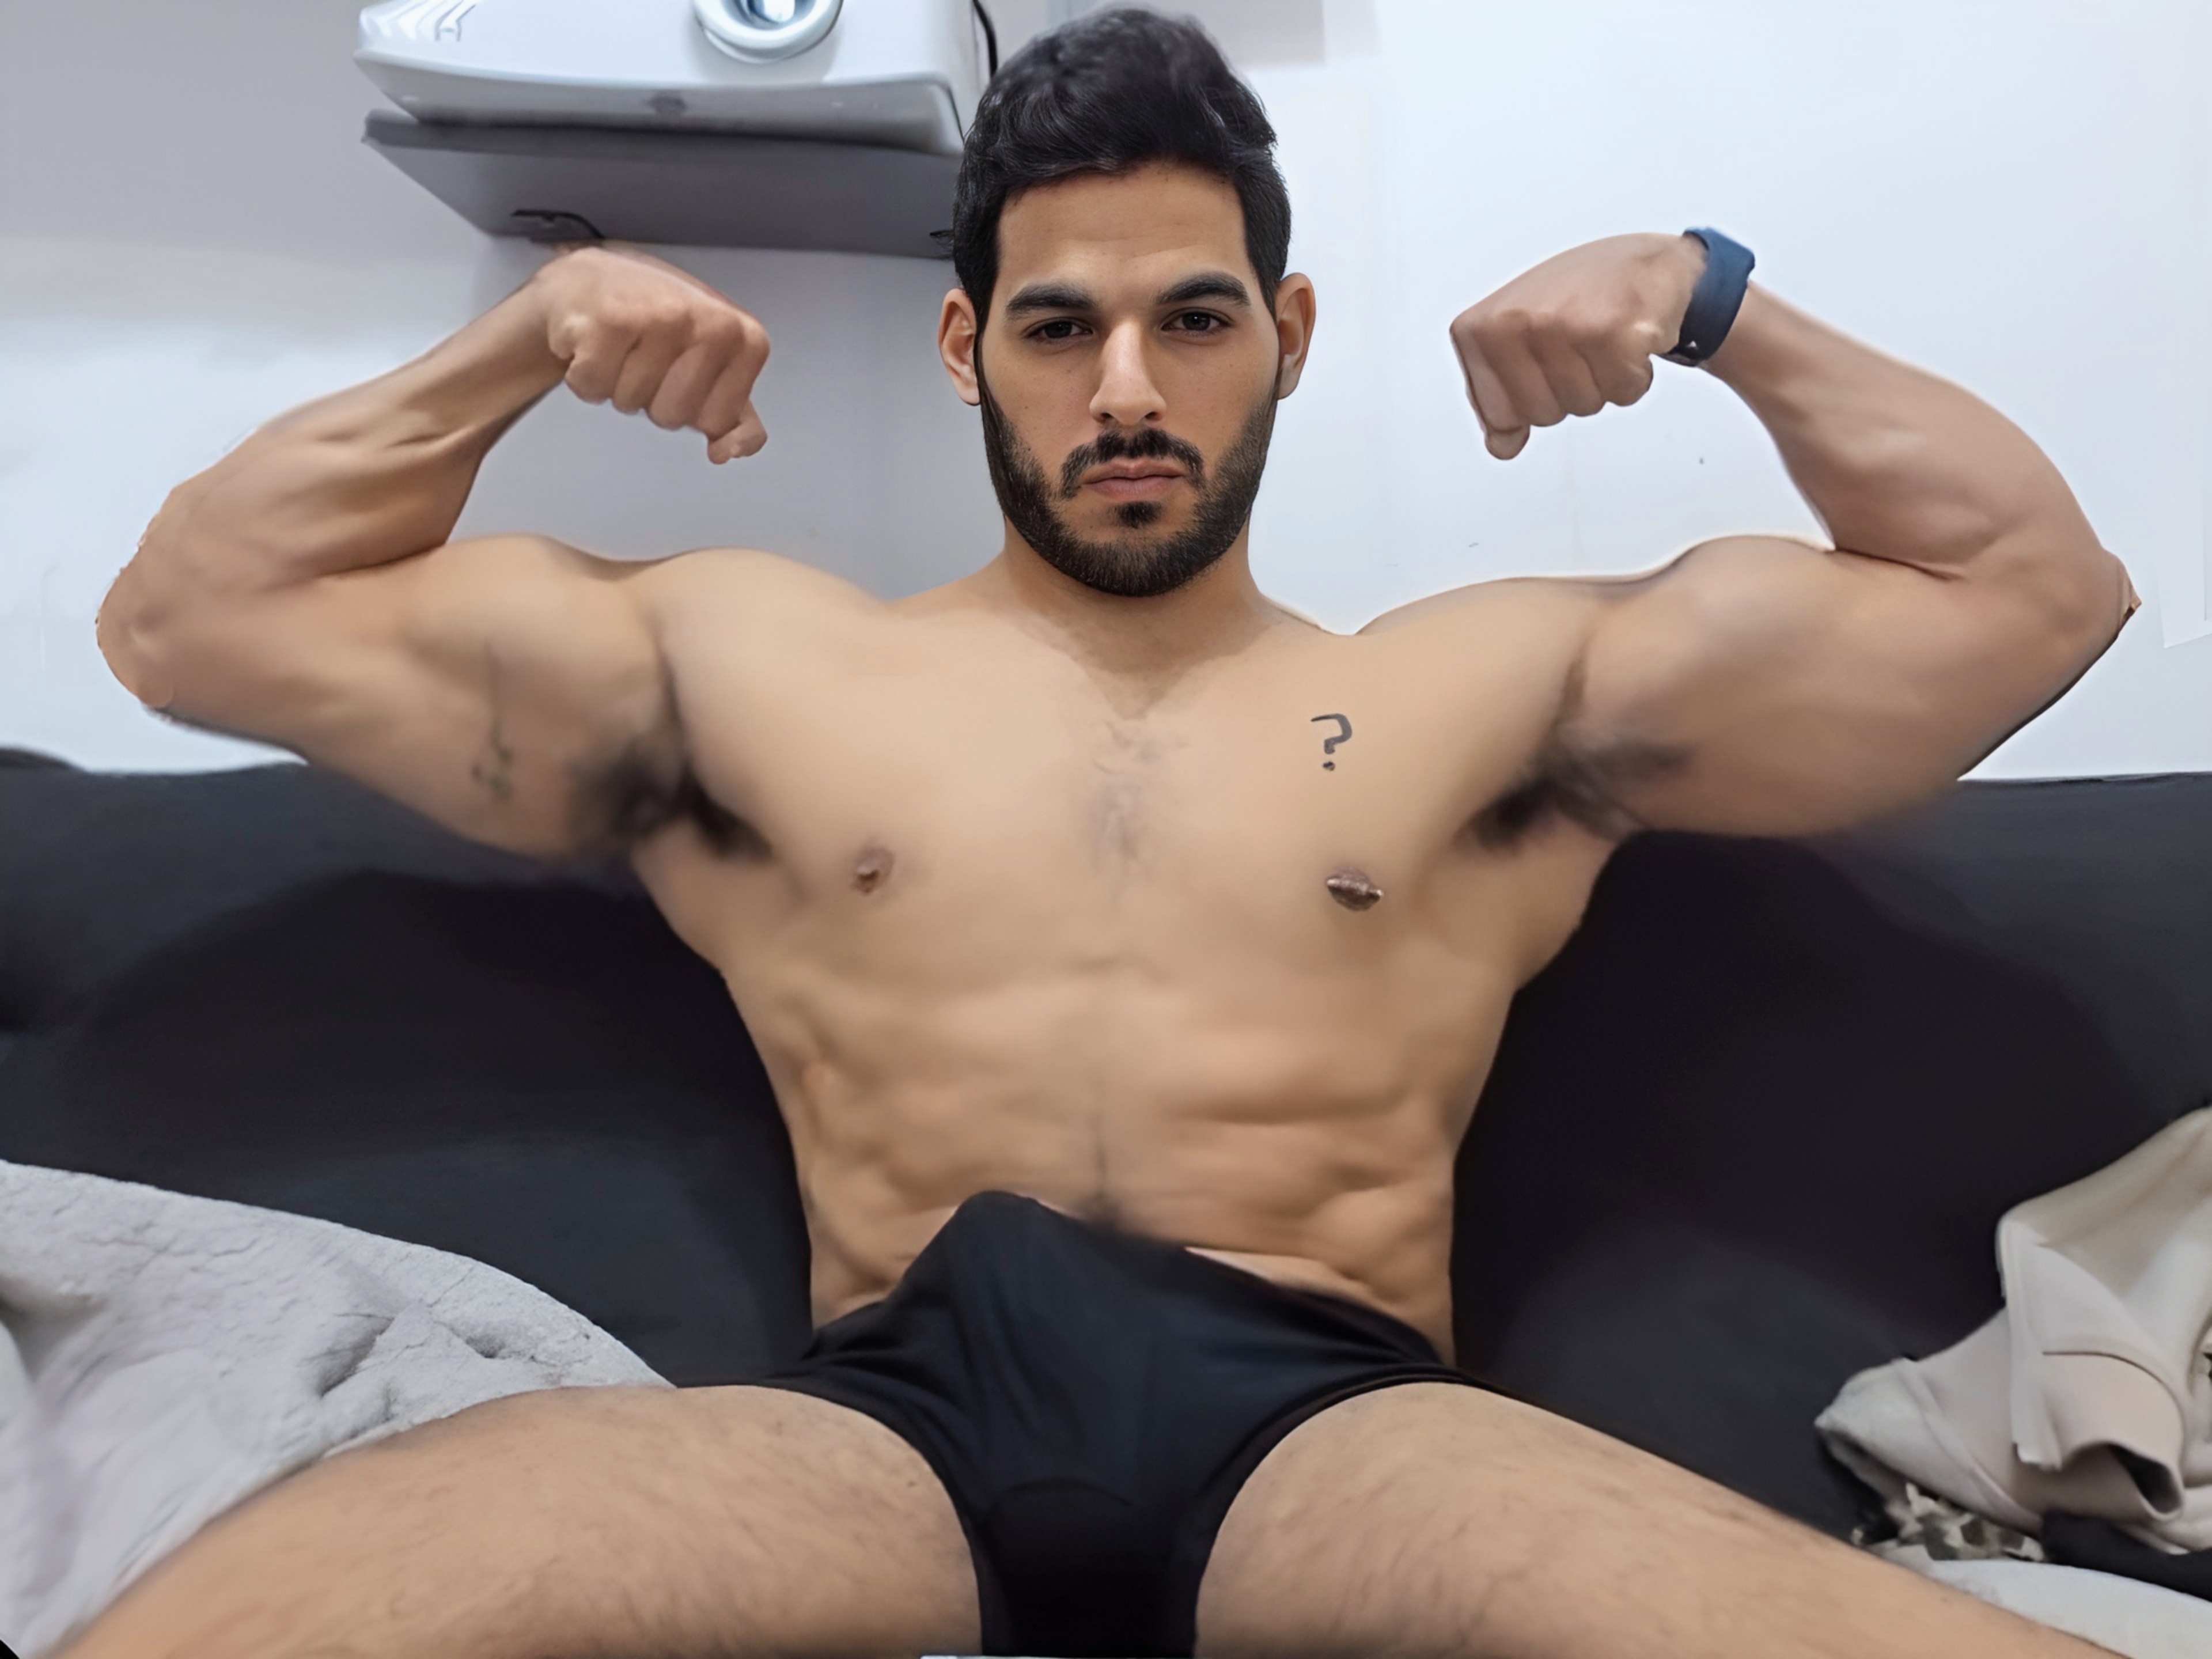 Hot Israeli Guy Cumming in His Underwear pic pic